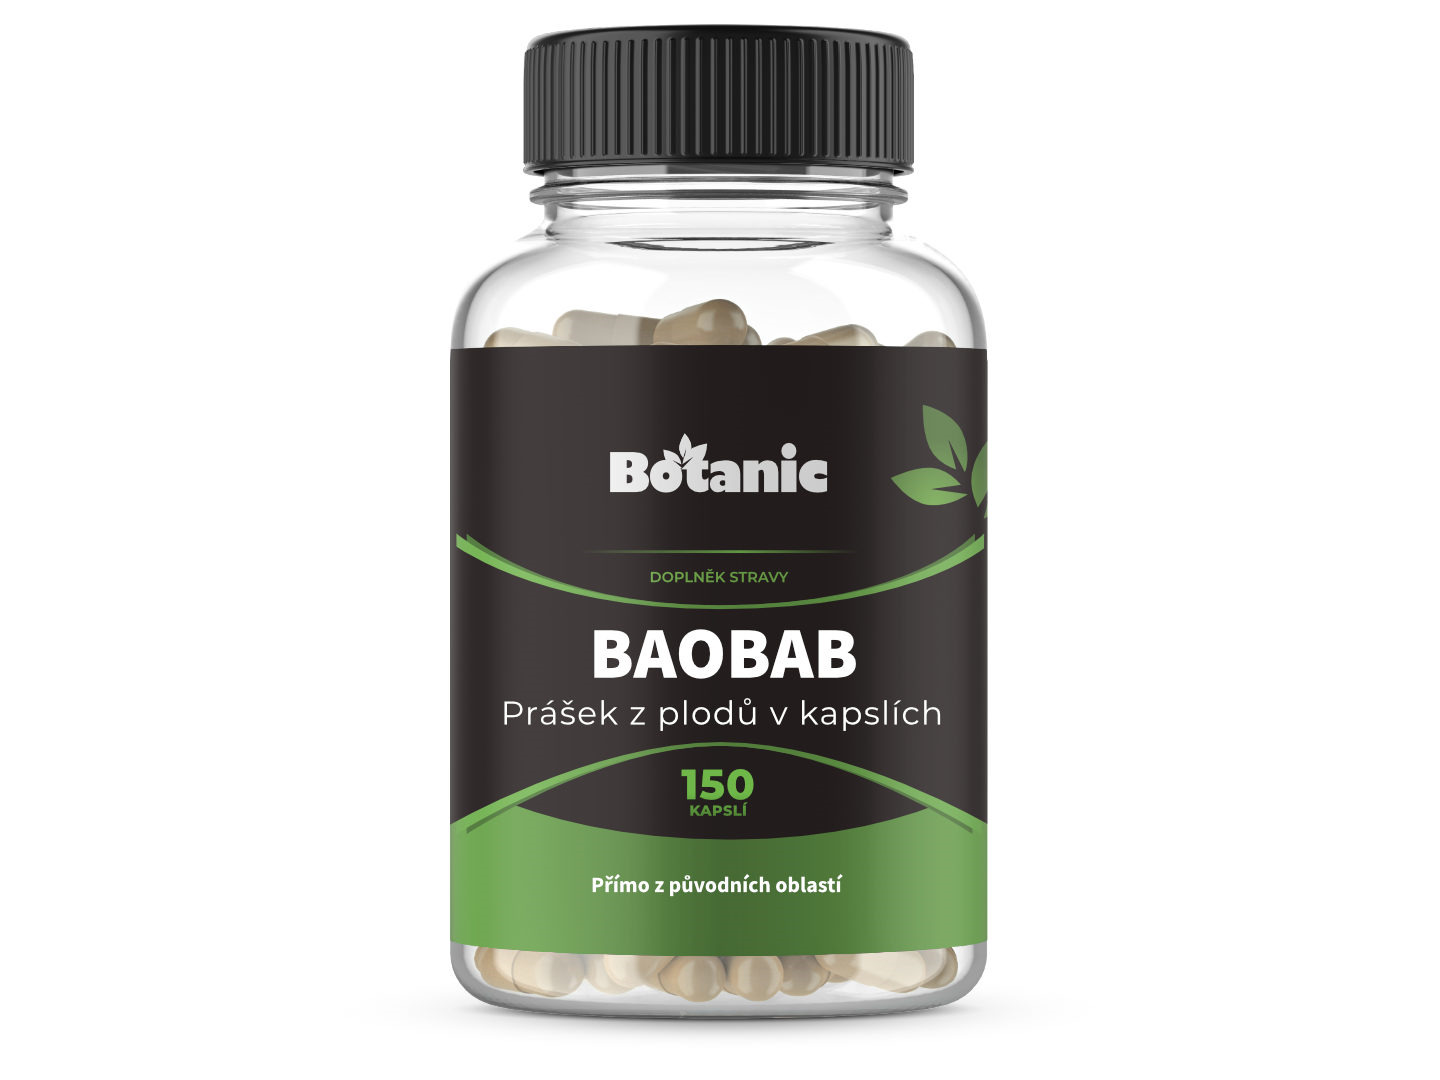 Botanic Baobab prášek z plodů 150kap.